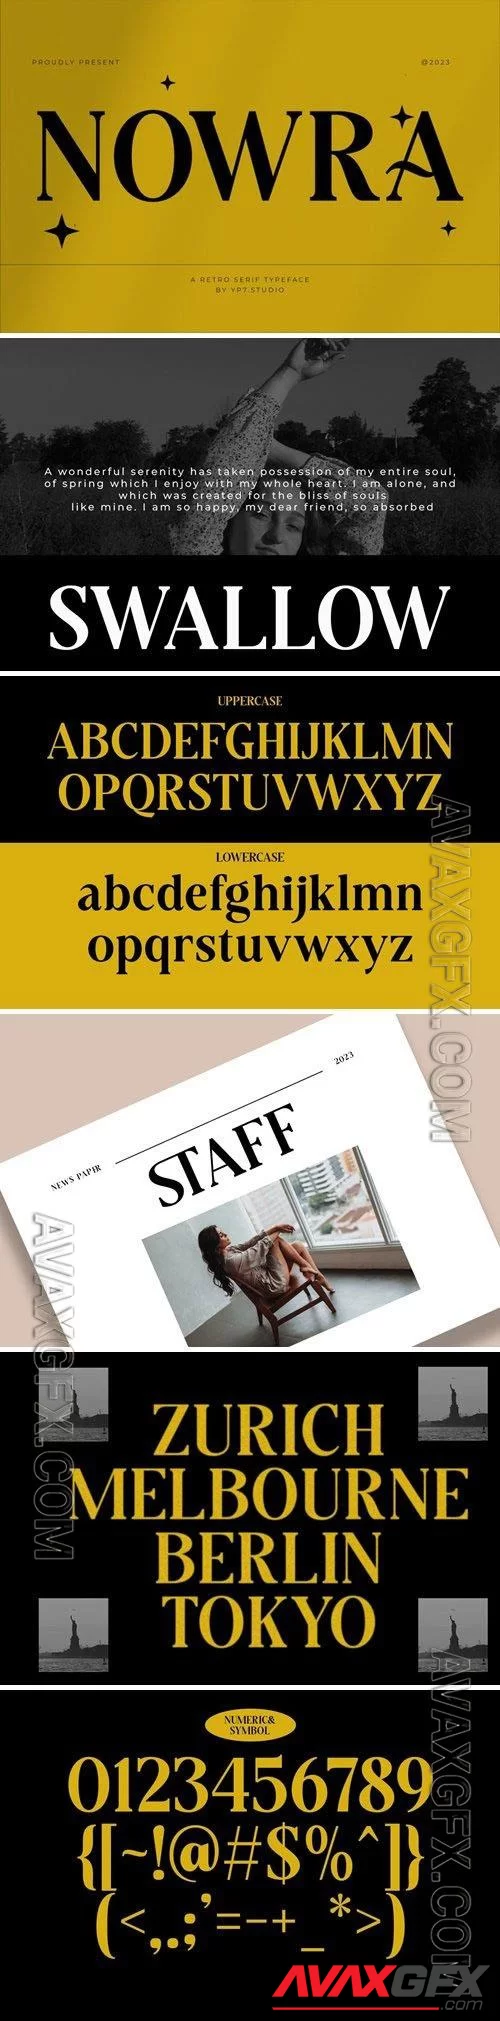 Modern Luxury Serif Font [OTF]